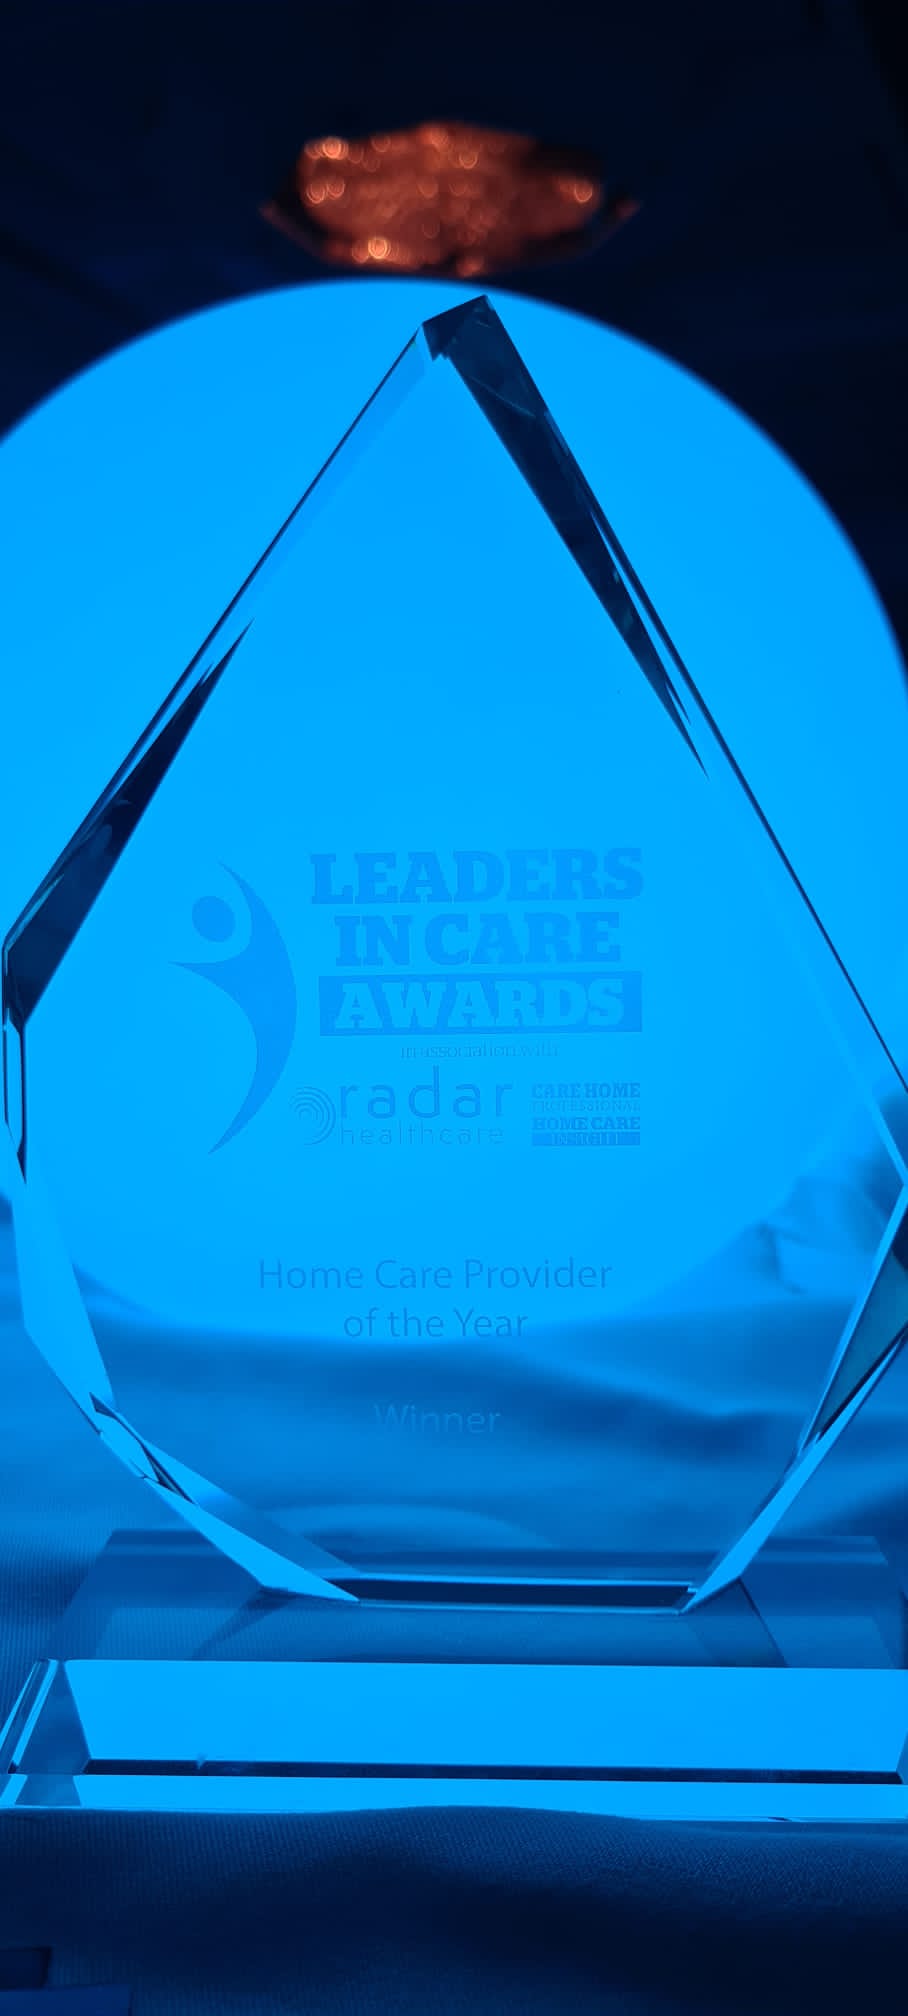 Leaders in Care Awards 2021 Winners